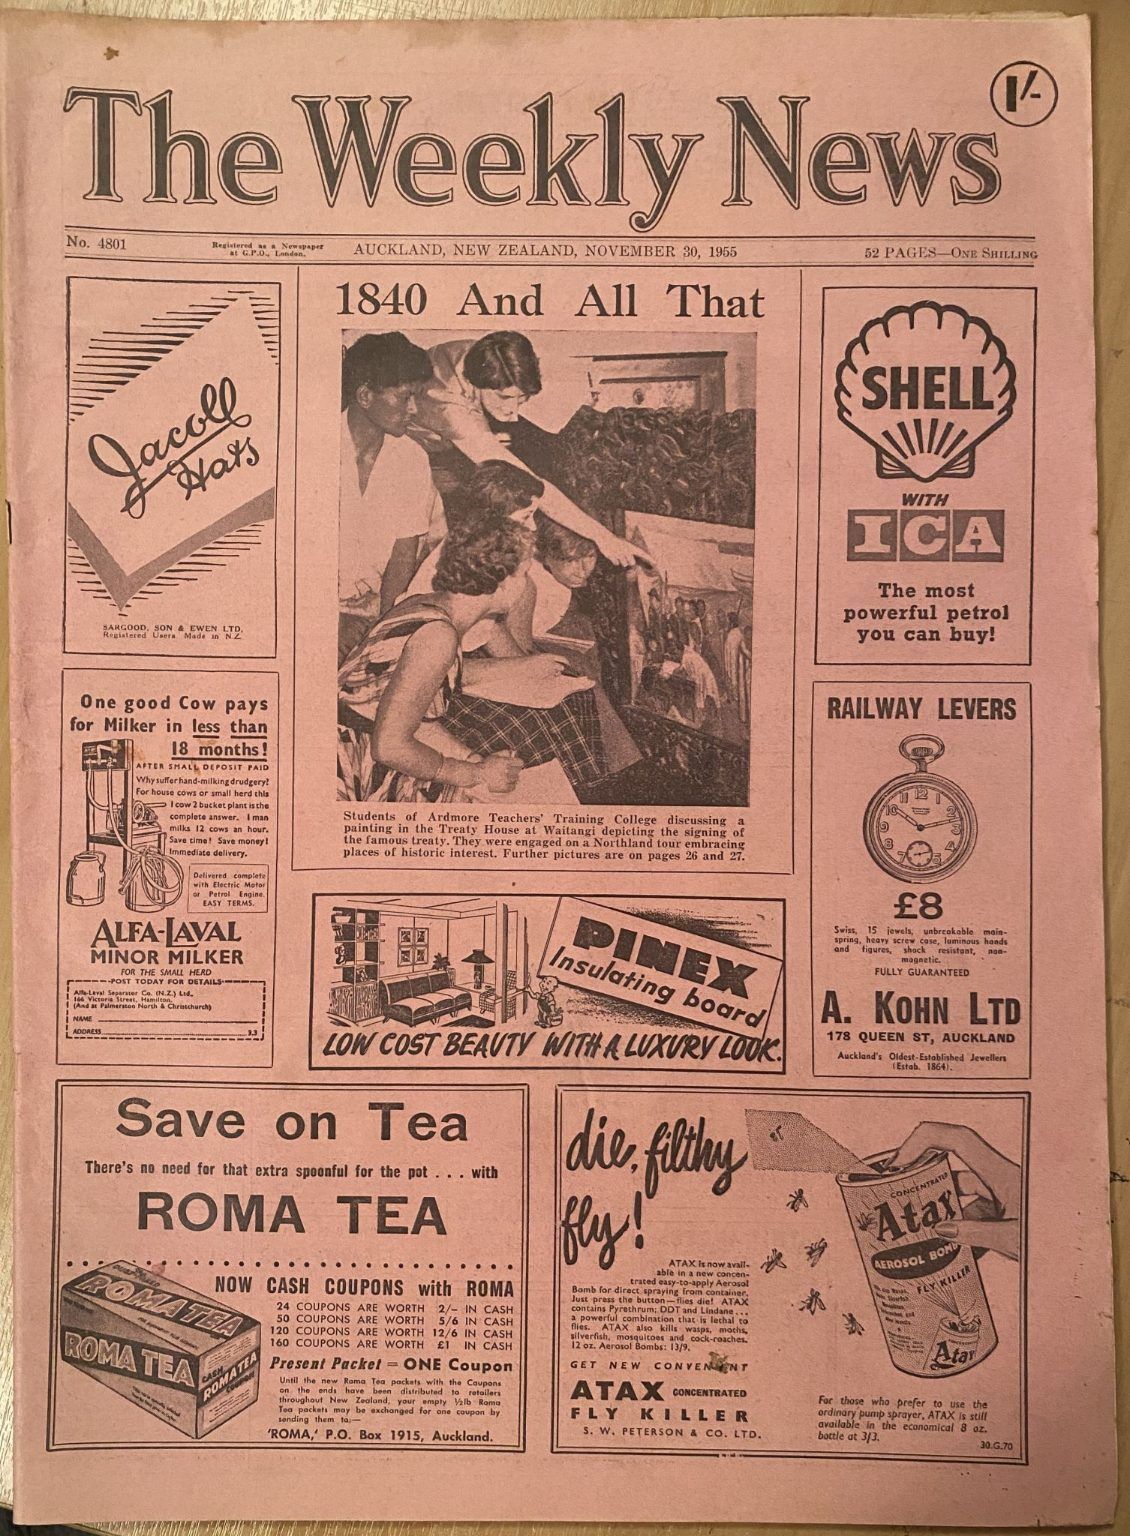 OLD NEWSPAPER: The Weekly News - No. 4801, 30 November 1955